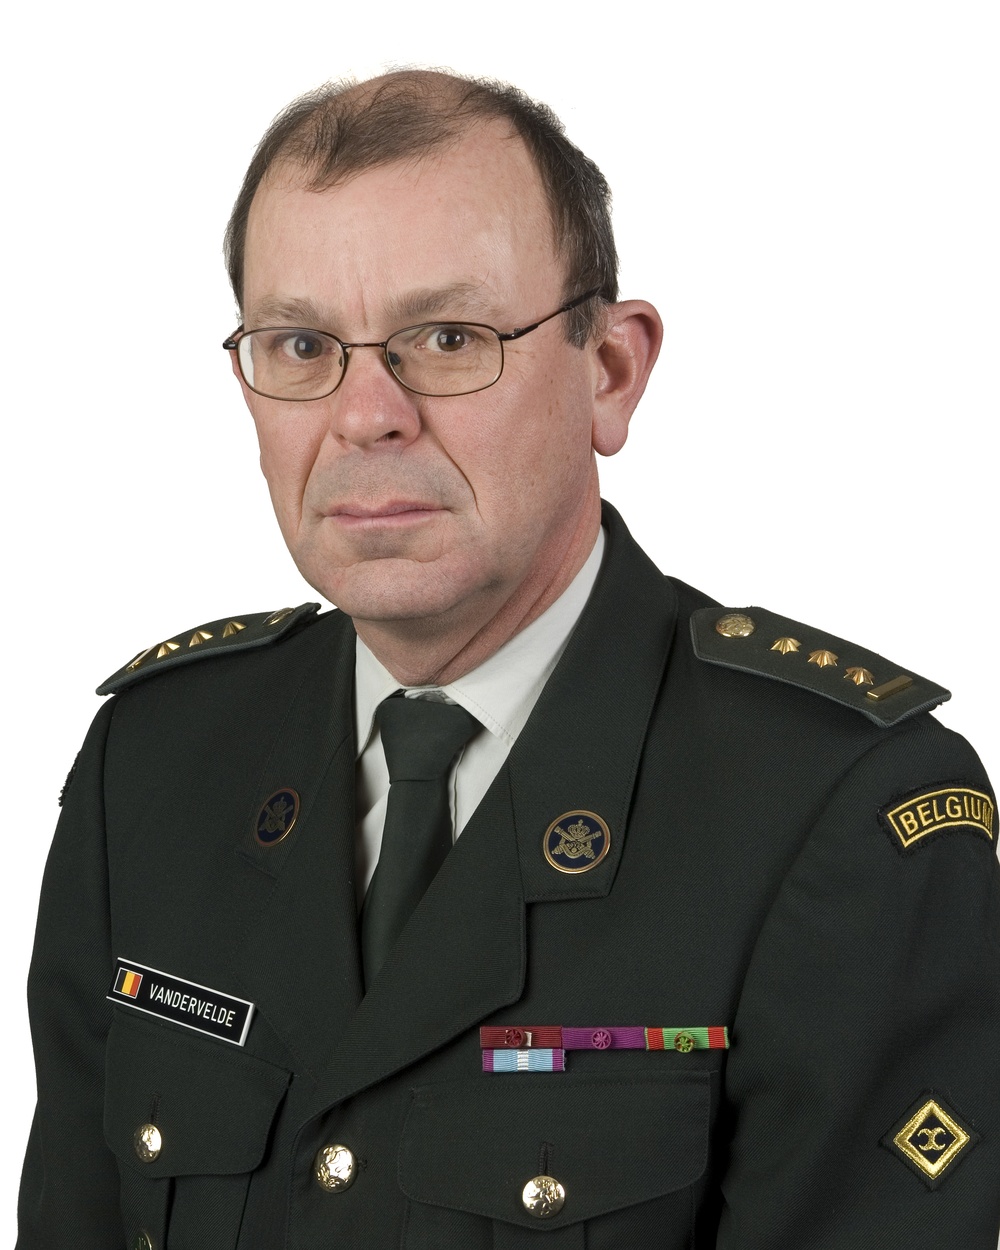 Col. Pierre Vandervelde